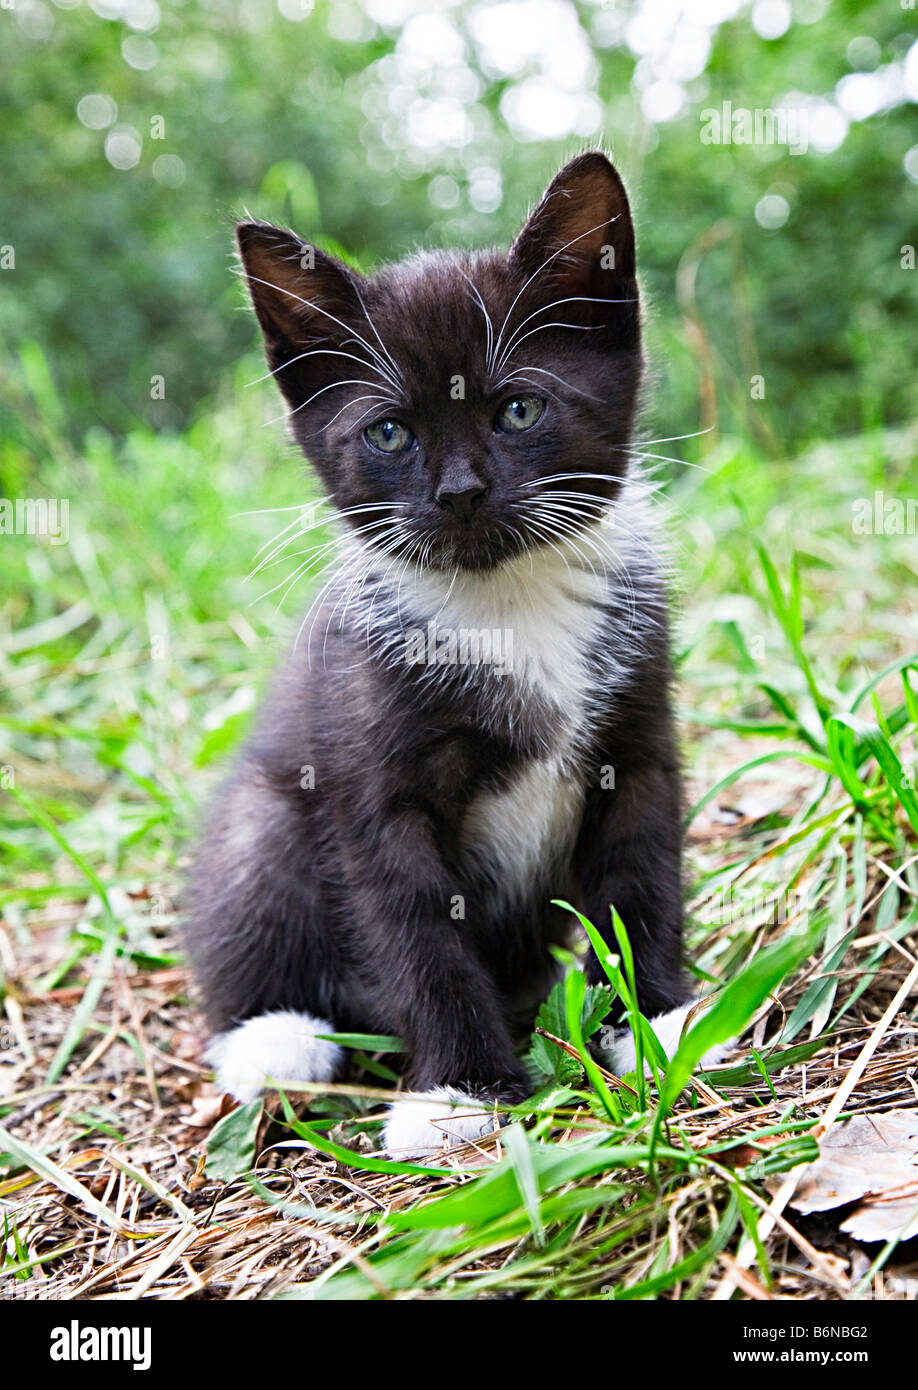 Black and white kitten Stock Photo